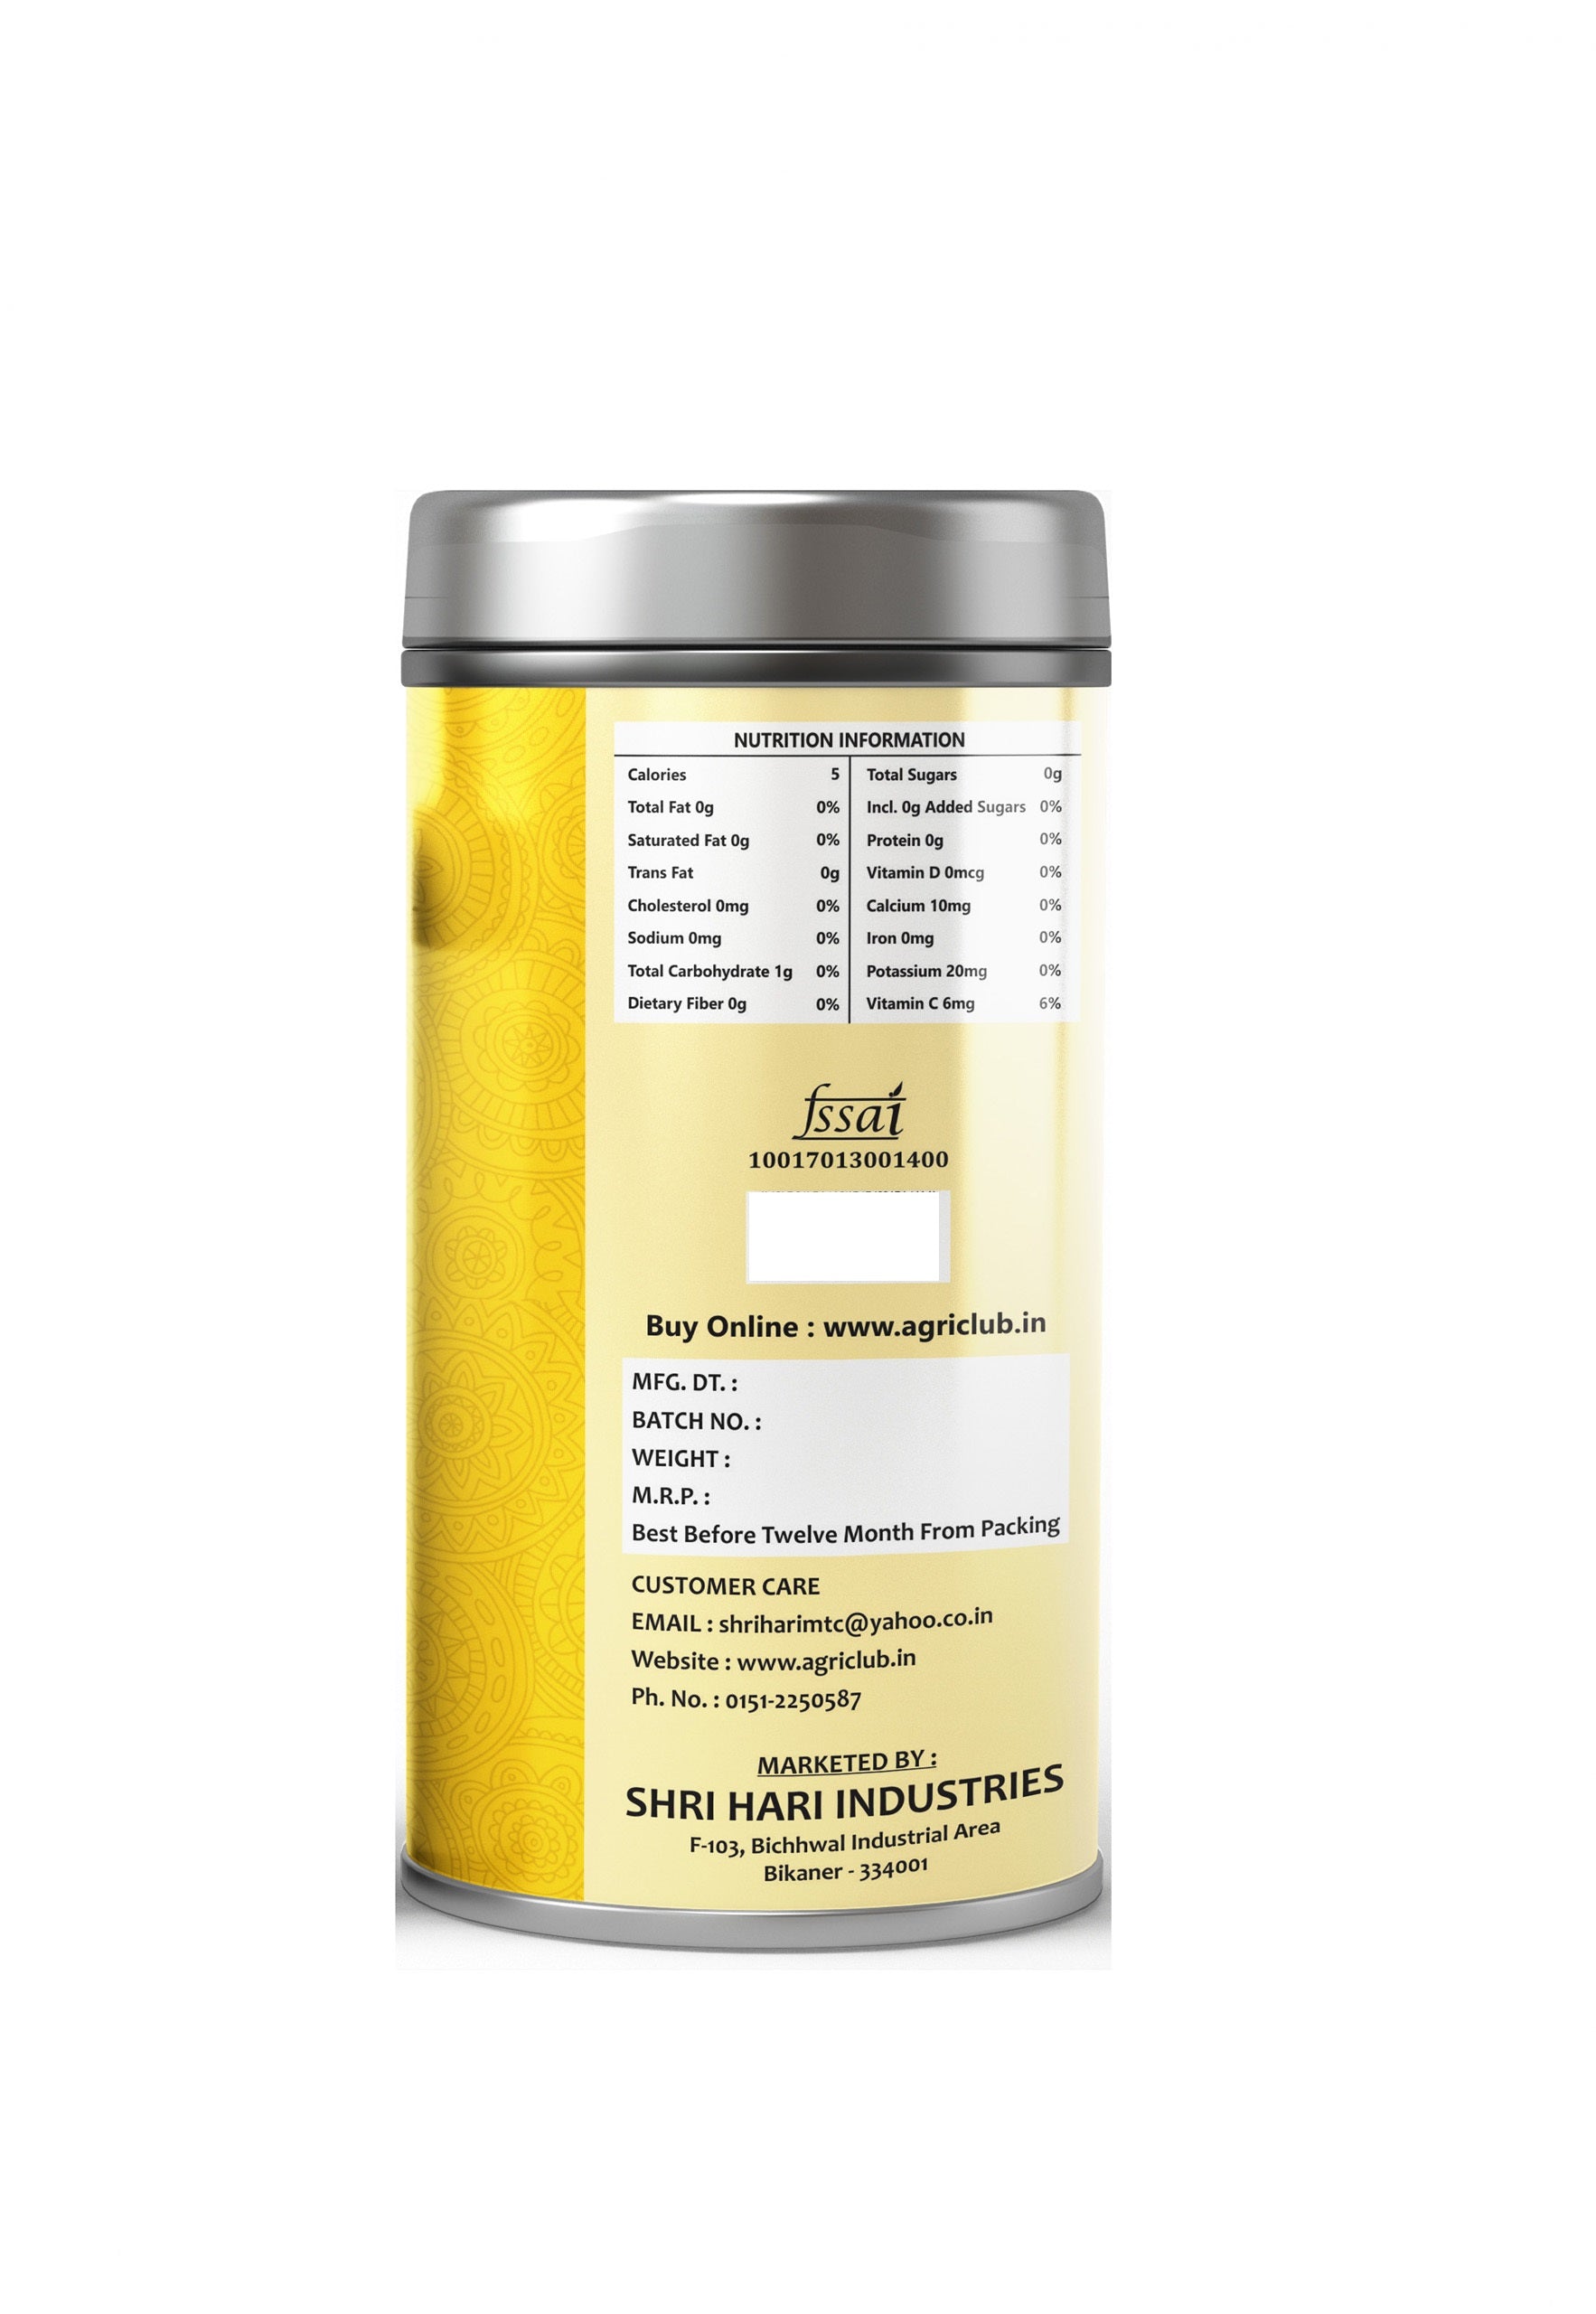 Instant Lemon Drink Powder Regular Premium Quality 250 GM